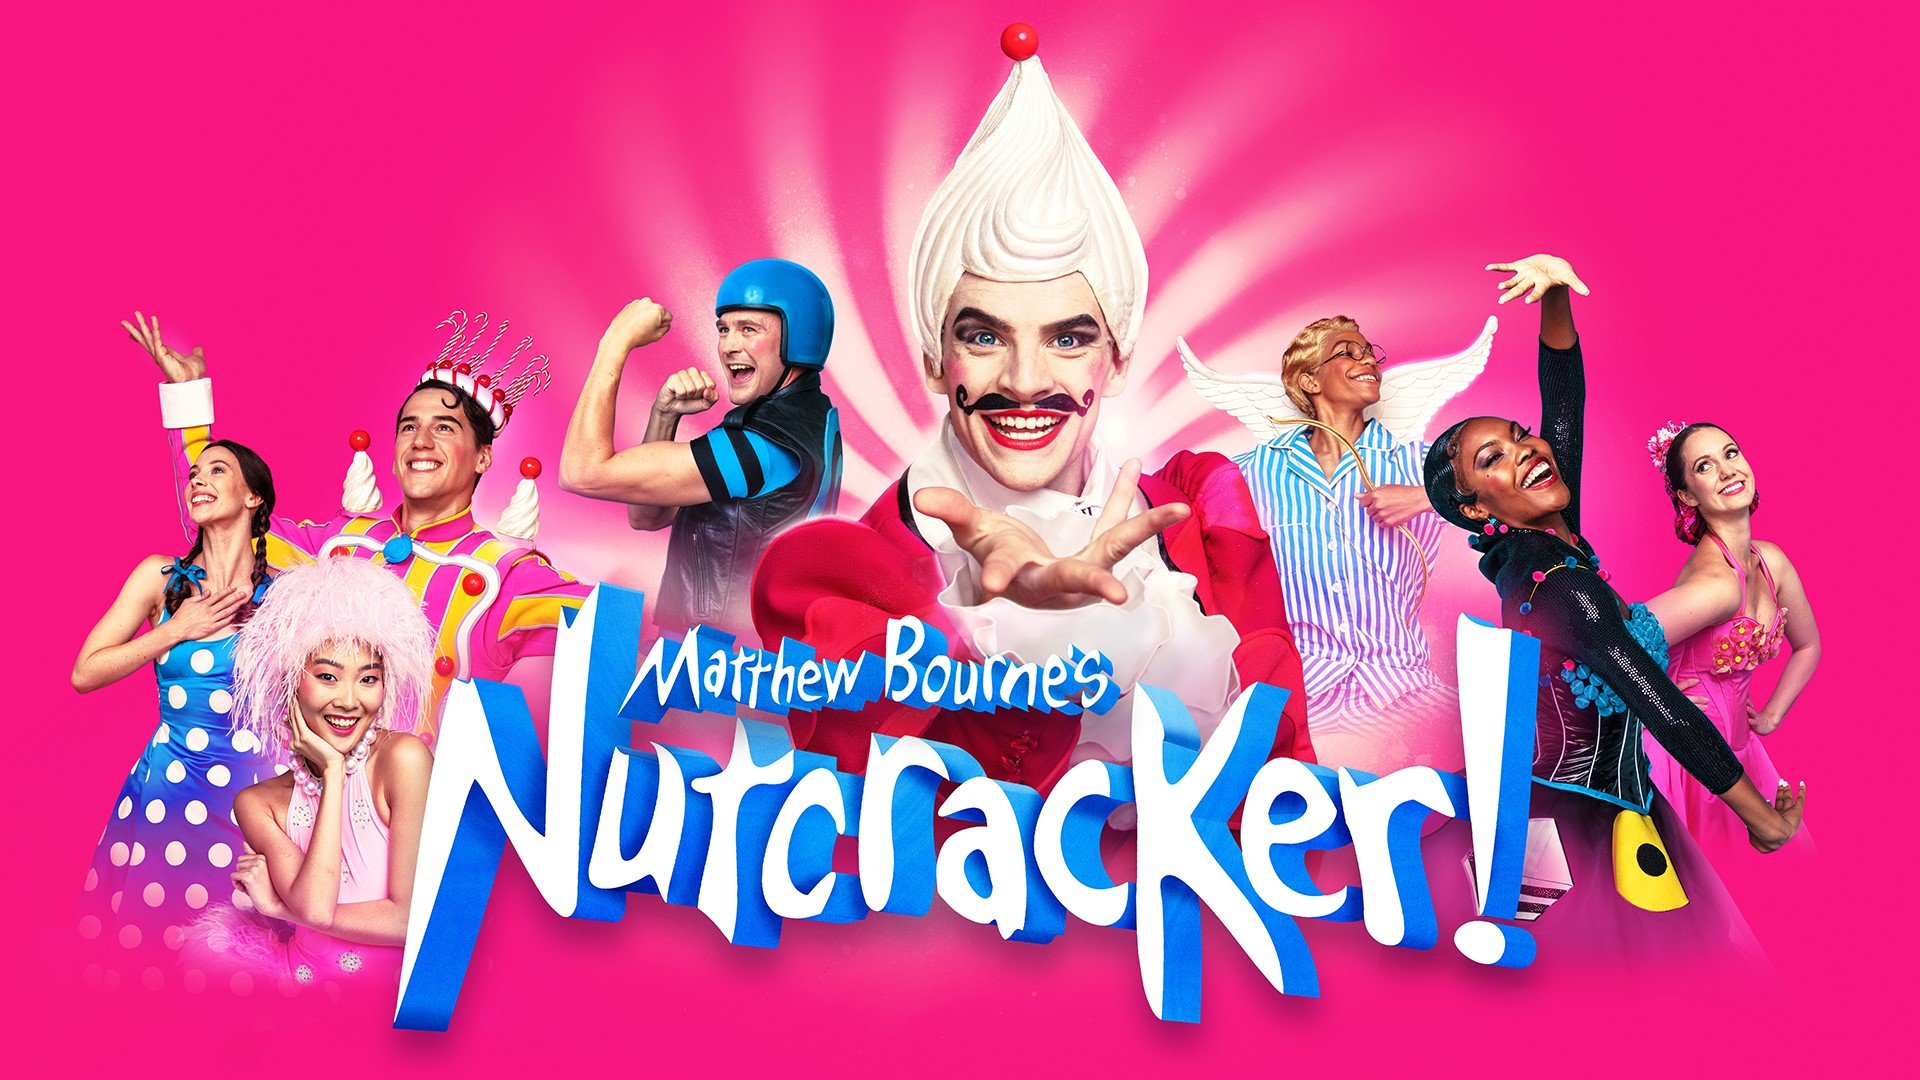 Matthew Bourne brings Nutcracker! back to Milton Keynes Theatre